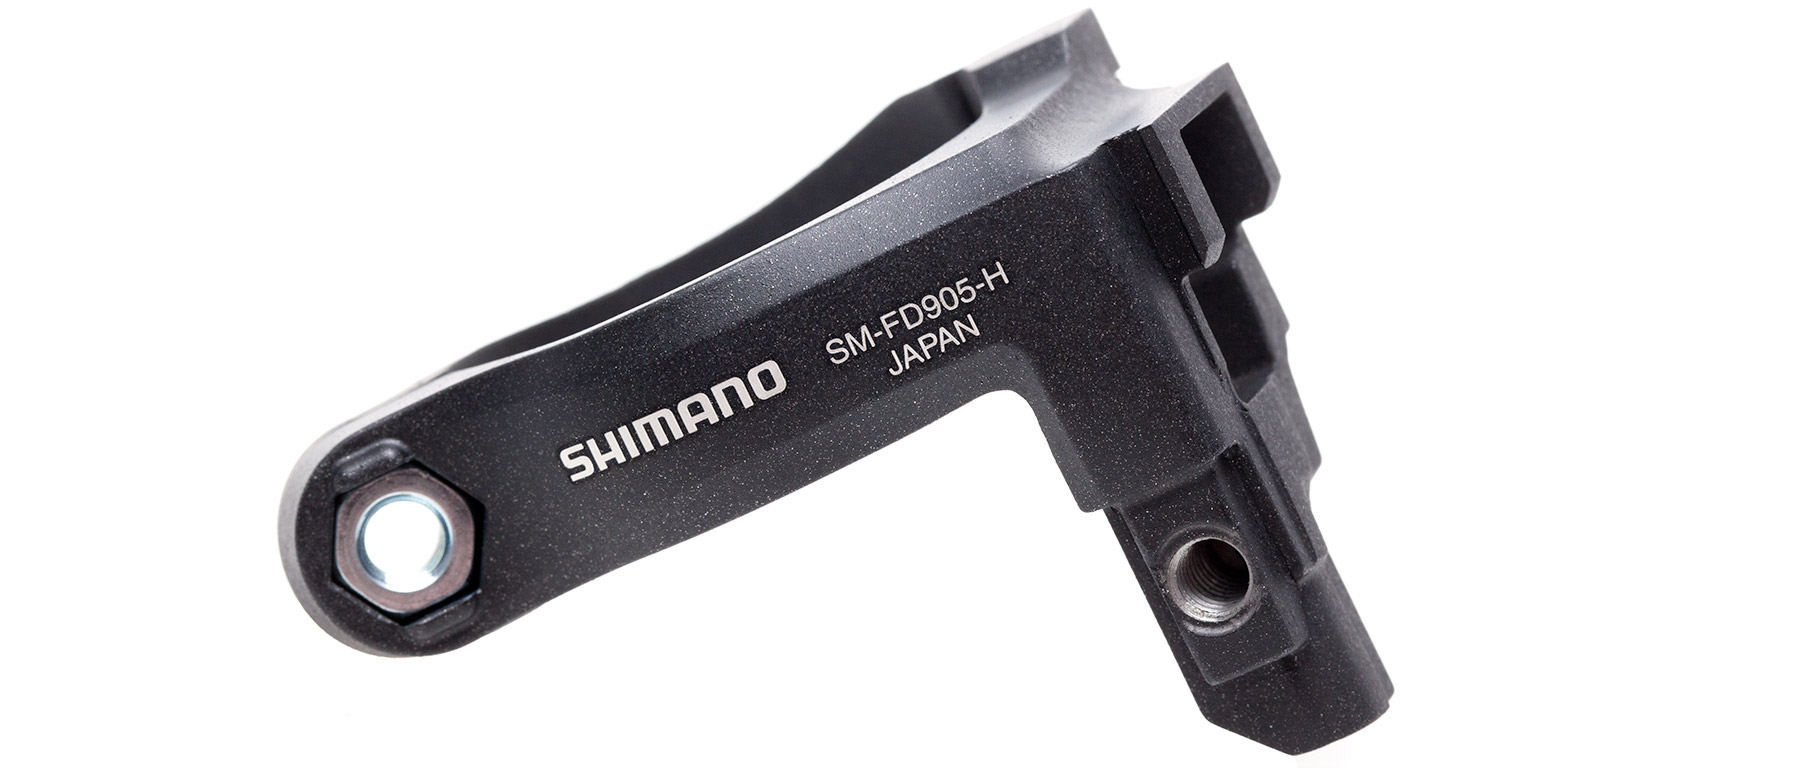 Shimano XTR Di2 Front Derailleur Adapter